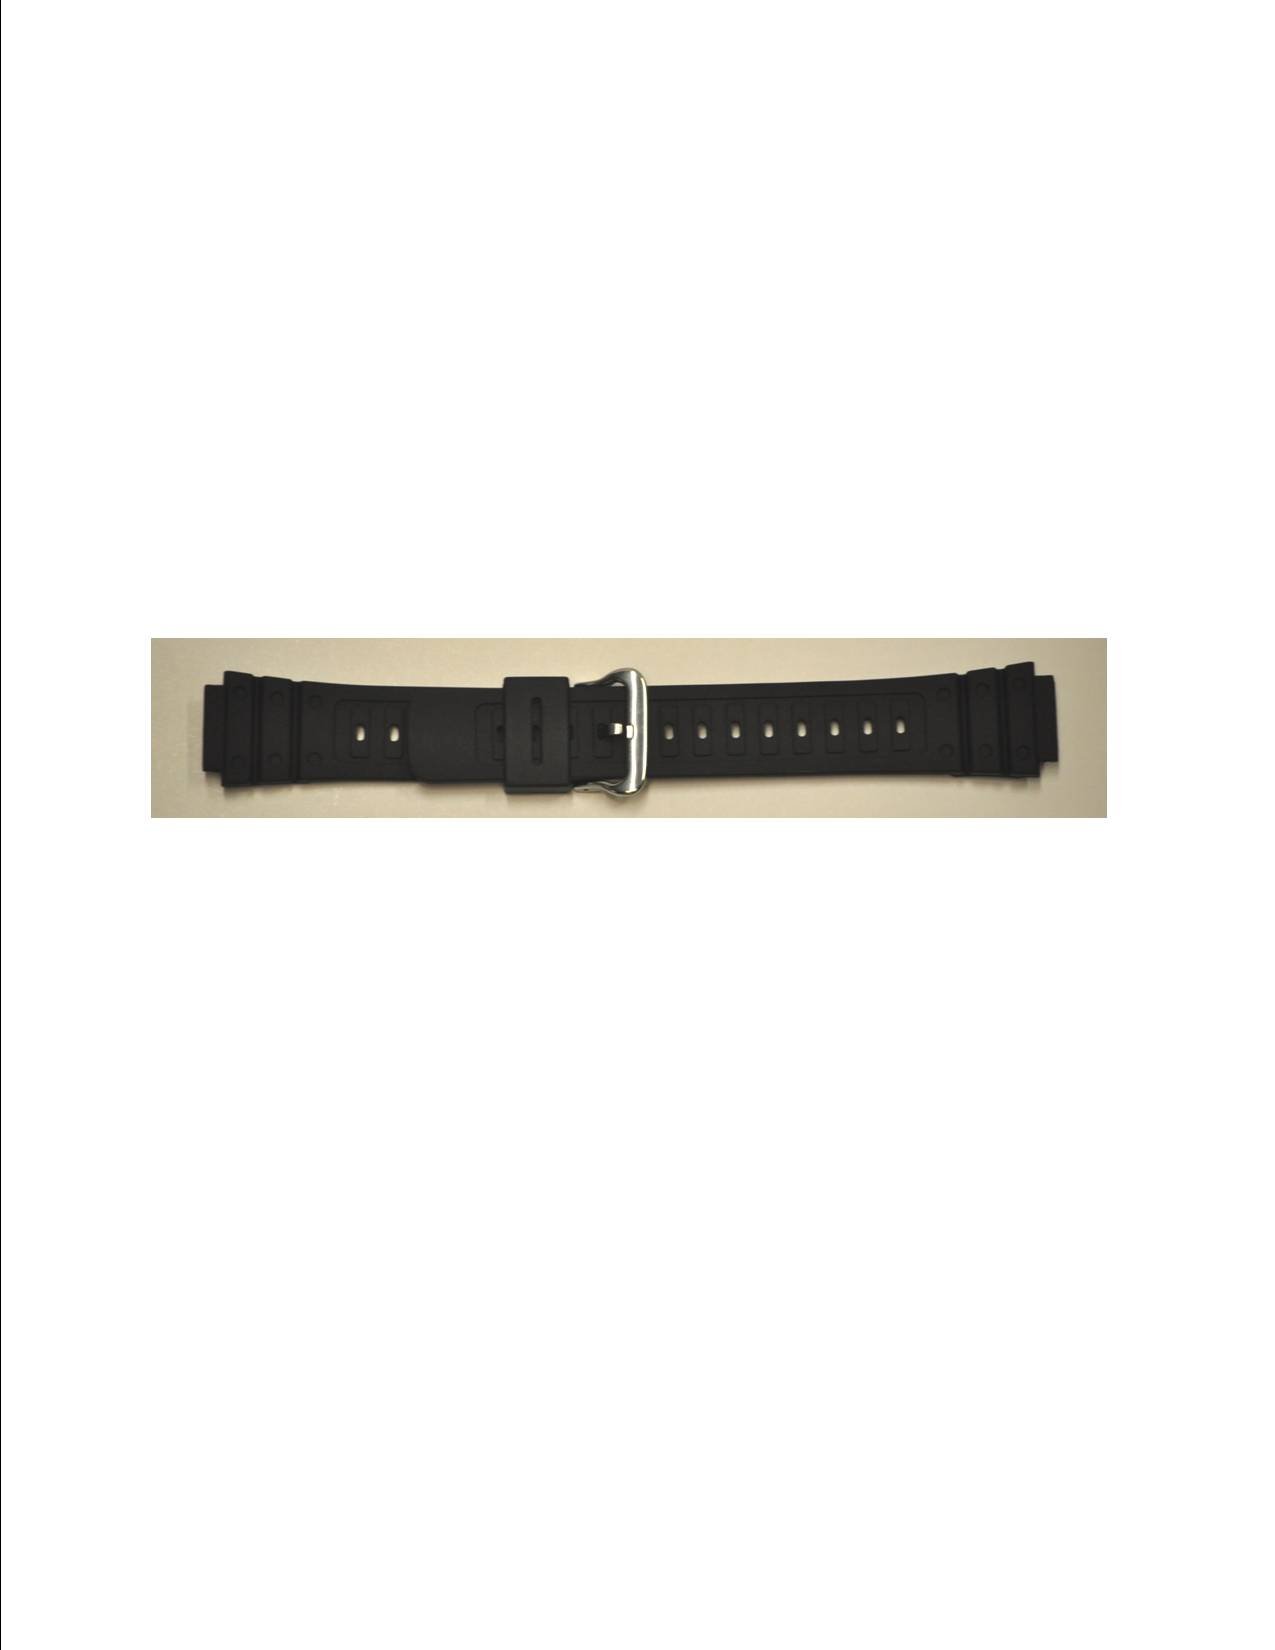 Timex Men's Q7B721 Resin Sport 18mm Black Replacement Watchband